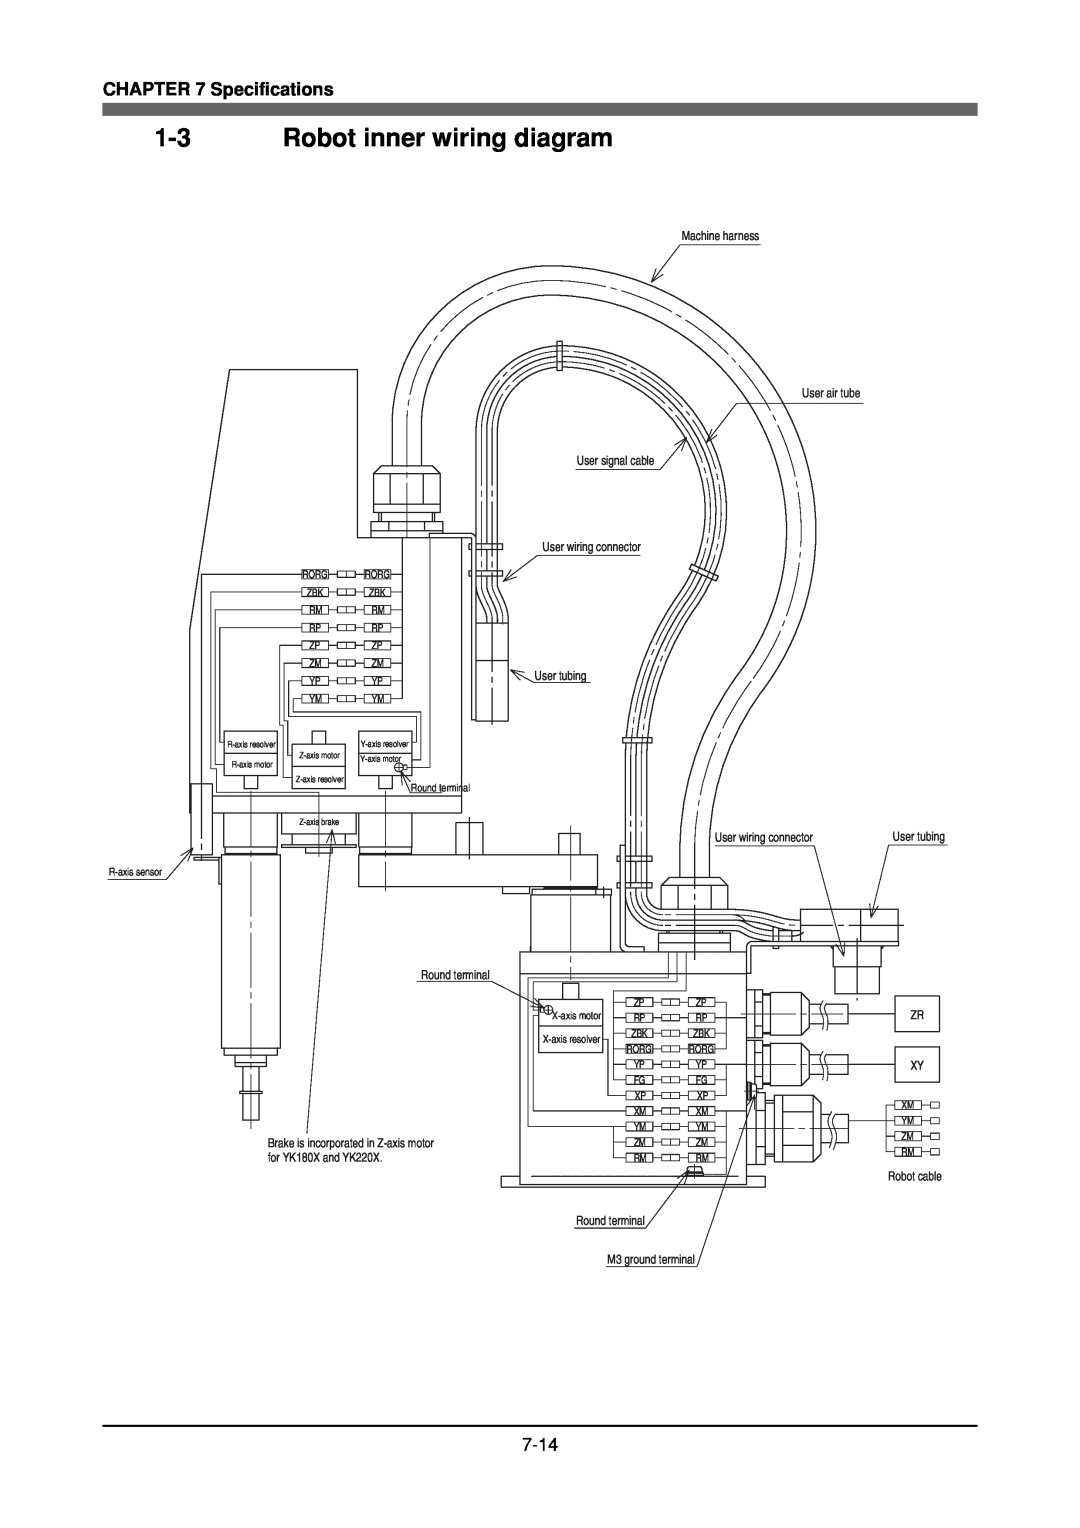 Yamaha YK180X, YK120X owner manual Robot inner wiring diagram, Specifications, Y-axis motor, Z-axis brake, User tubing 